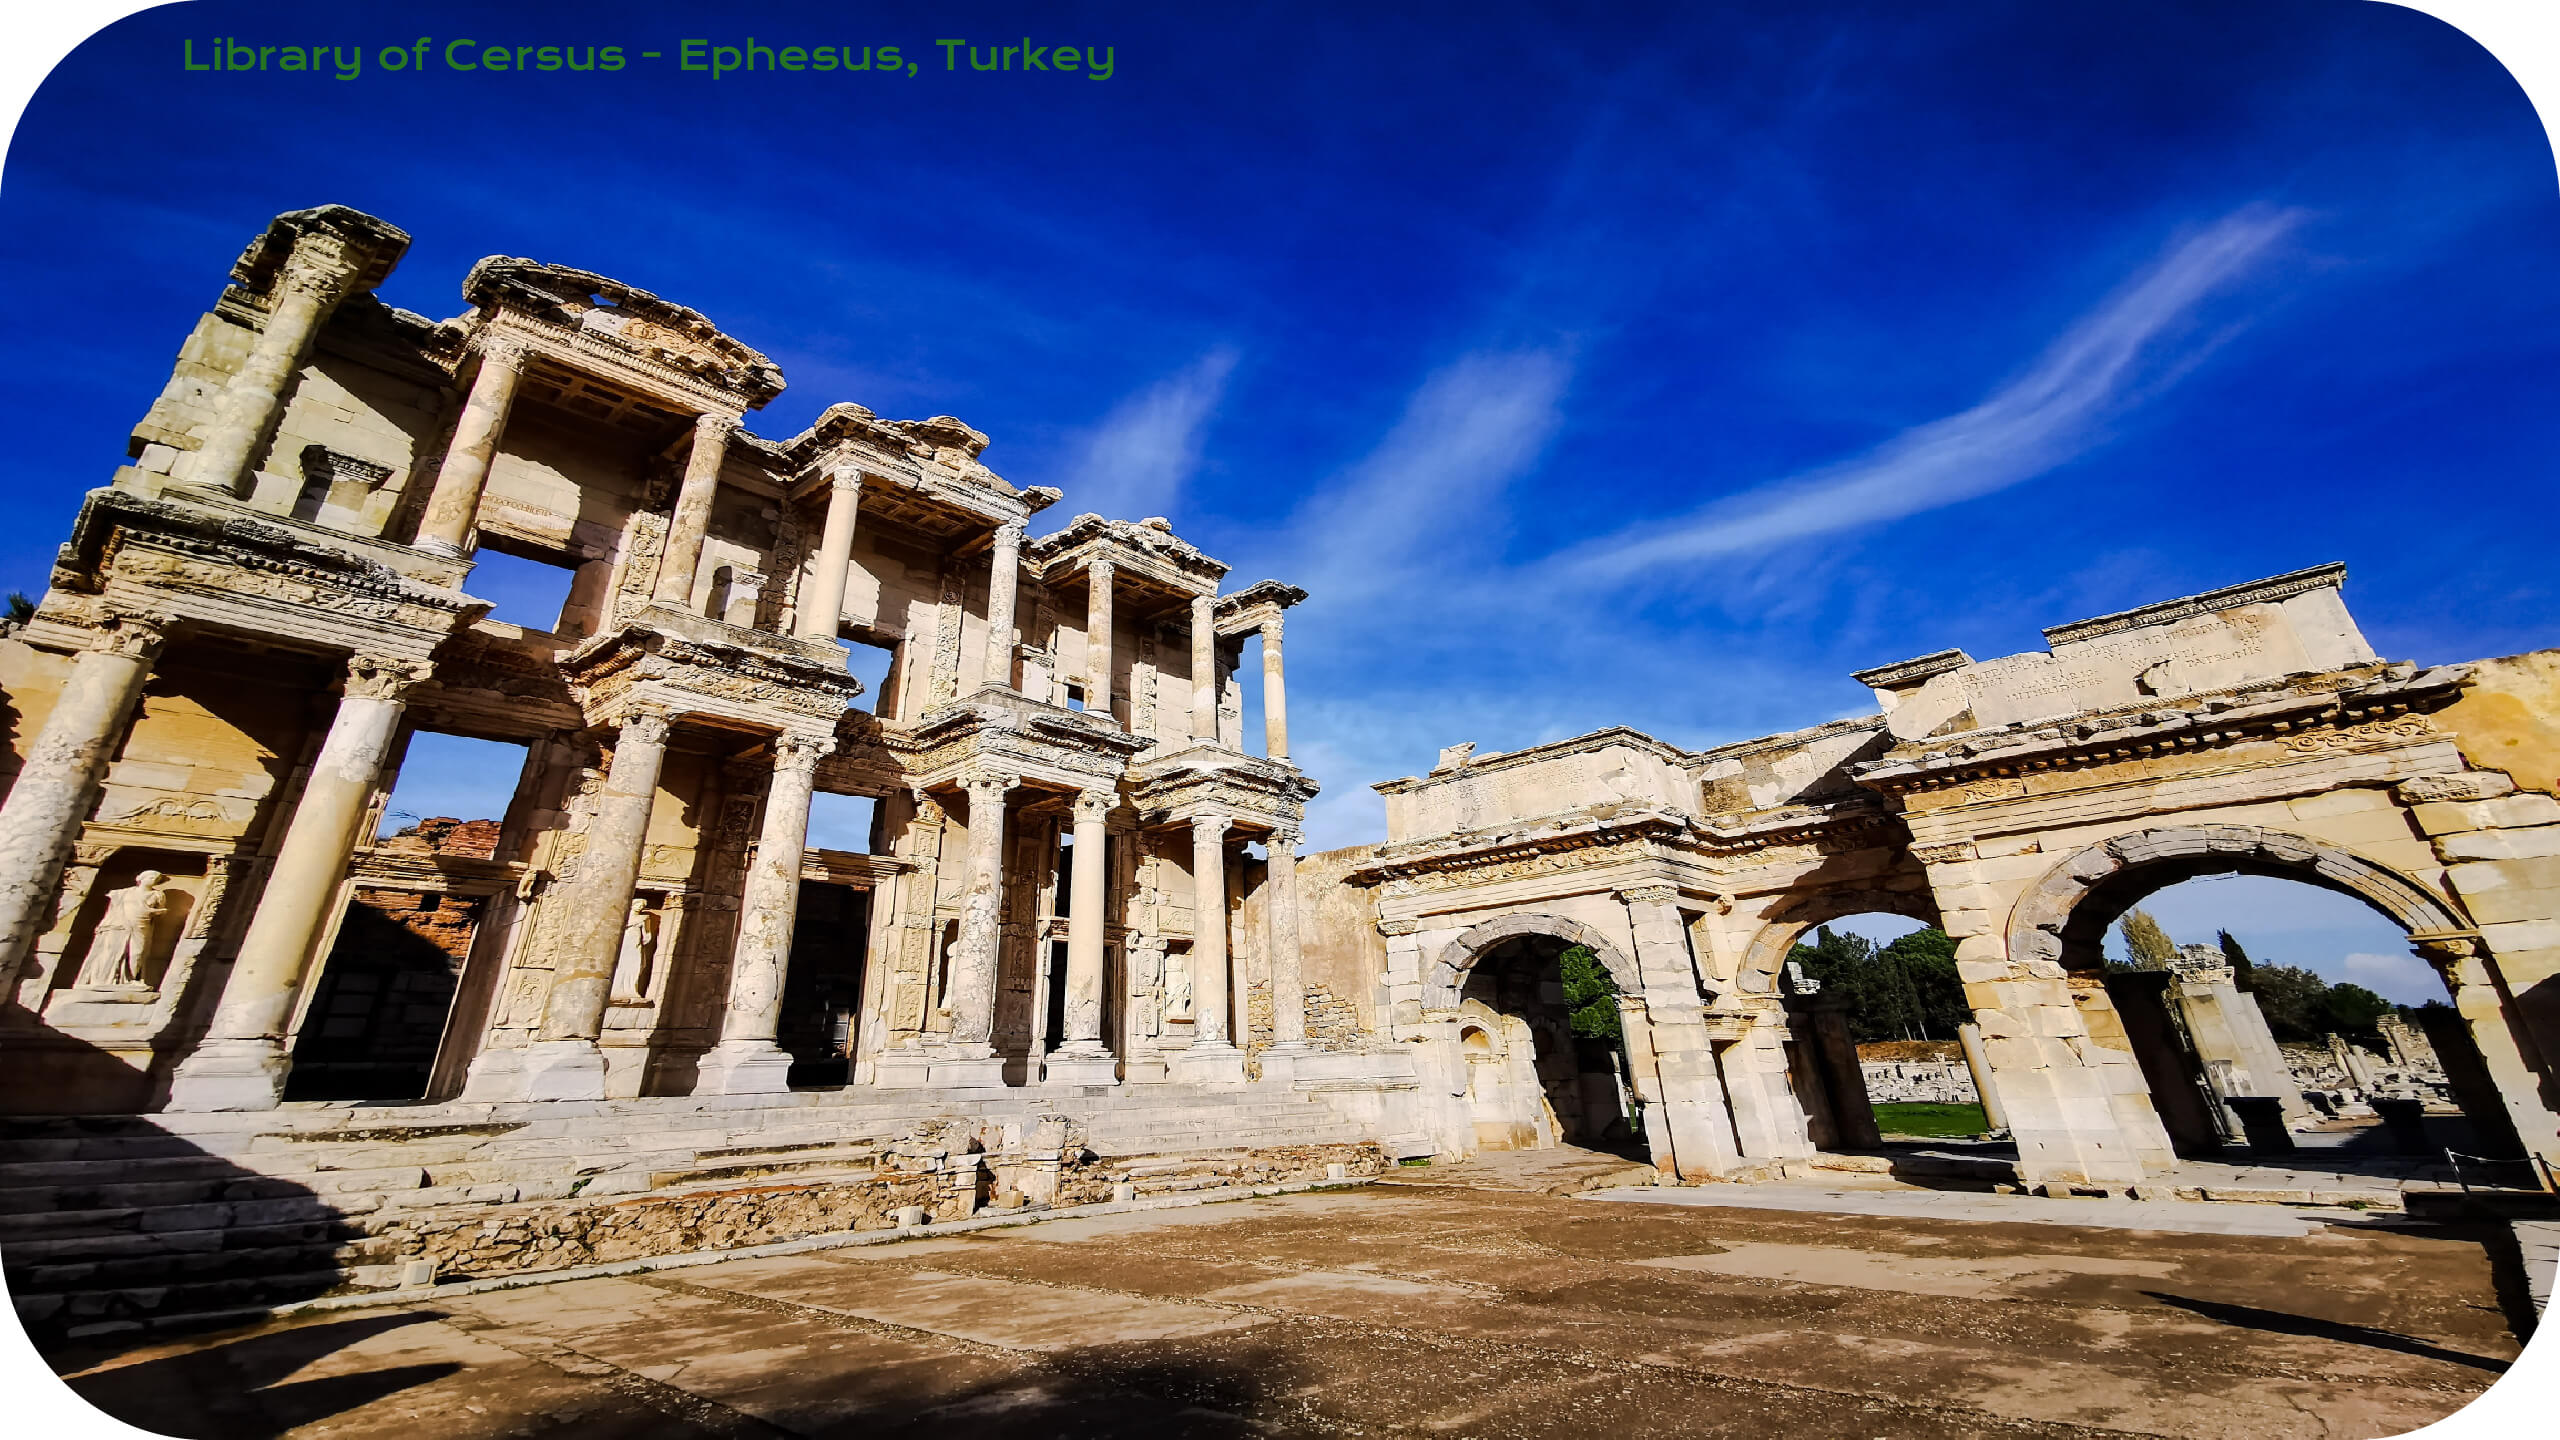 Library of Celsus - Ephesus, Turkey